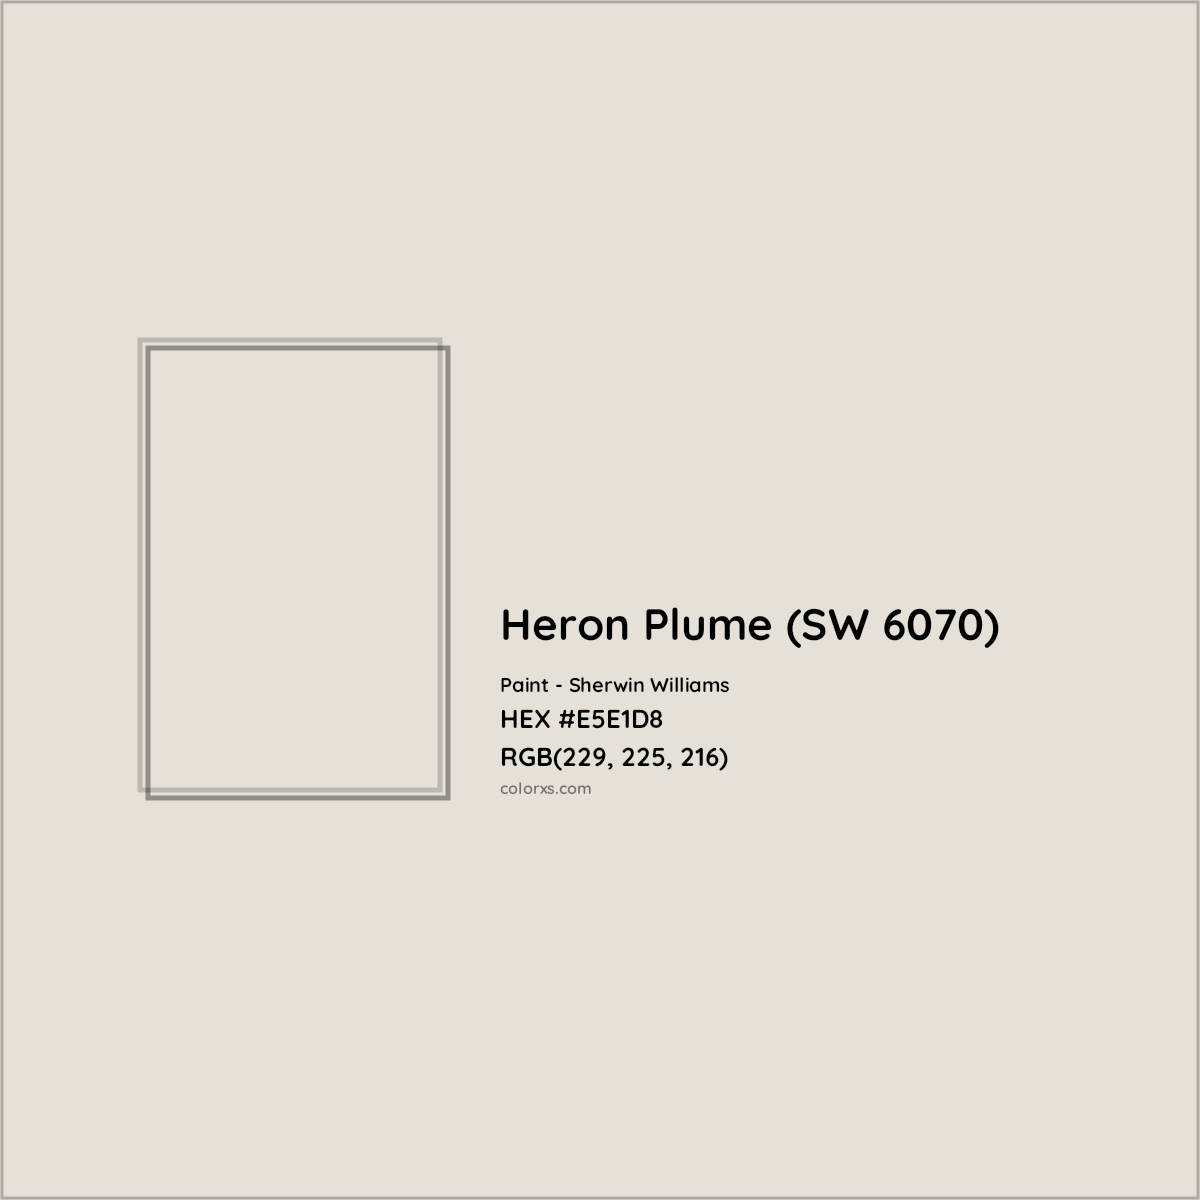 HEX #E5E1D8 Heron Plume (SW 6070) Paint Sherwin Williams - Color Code